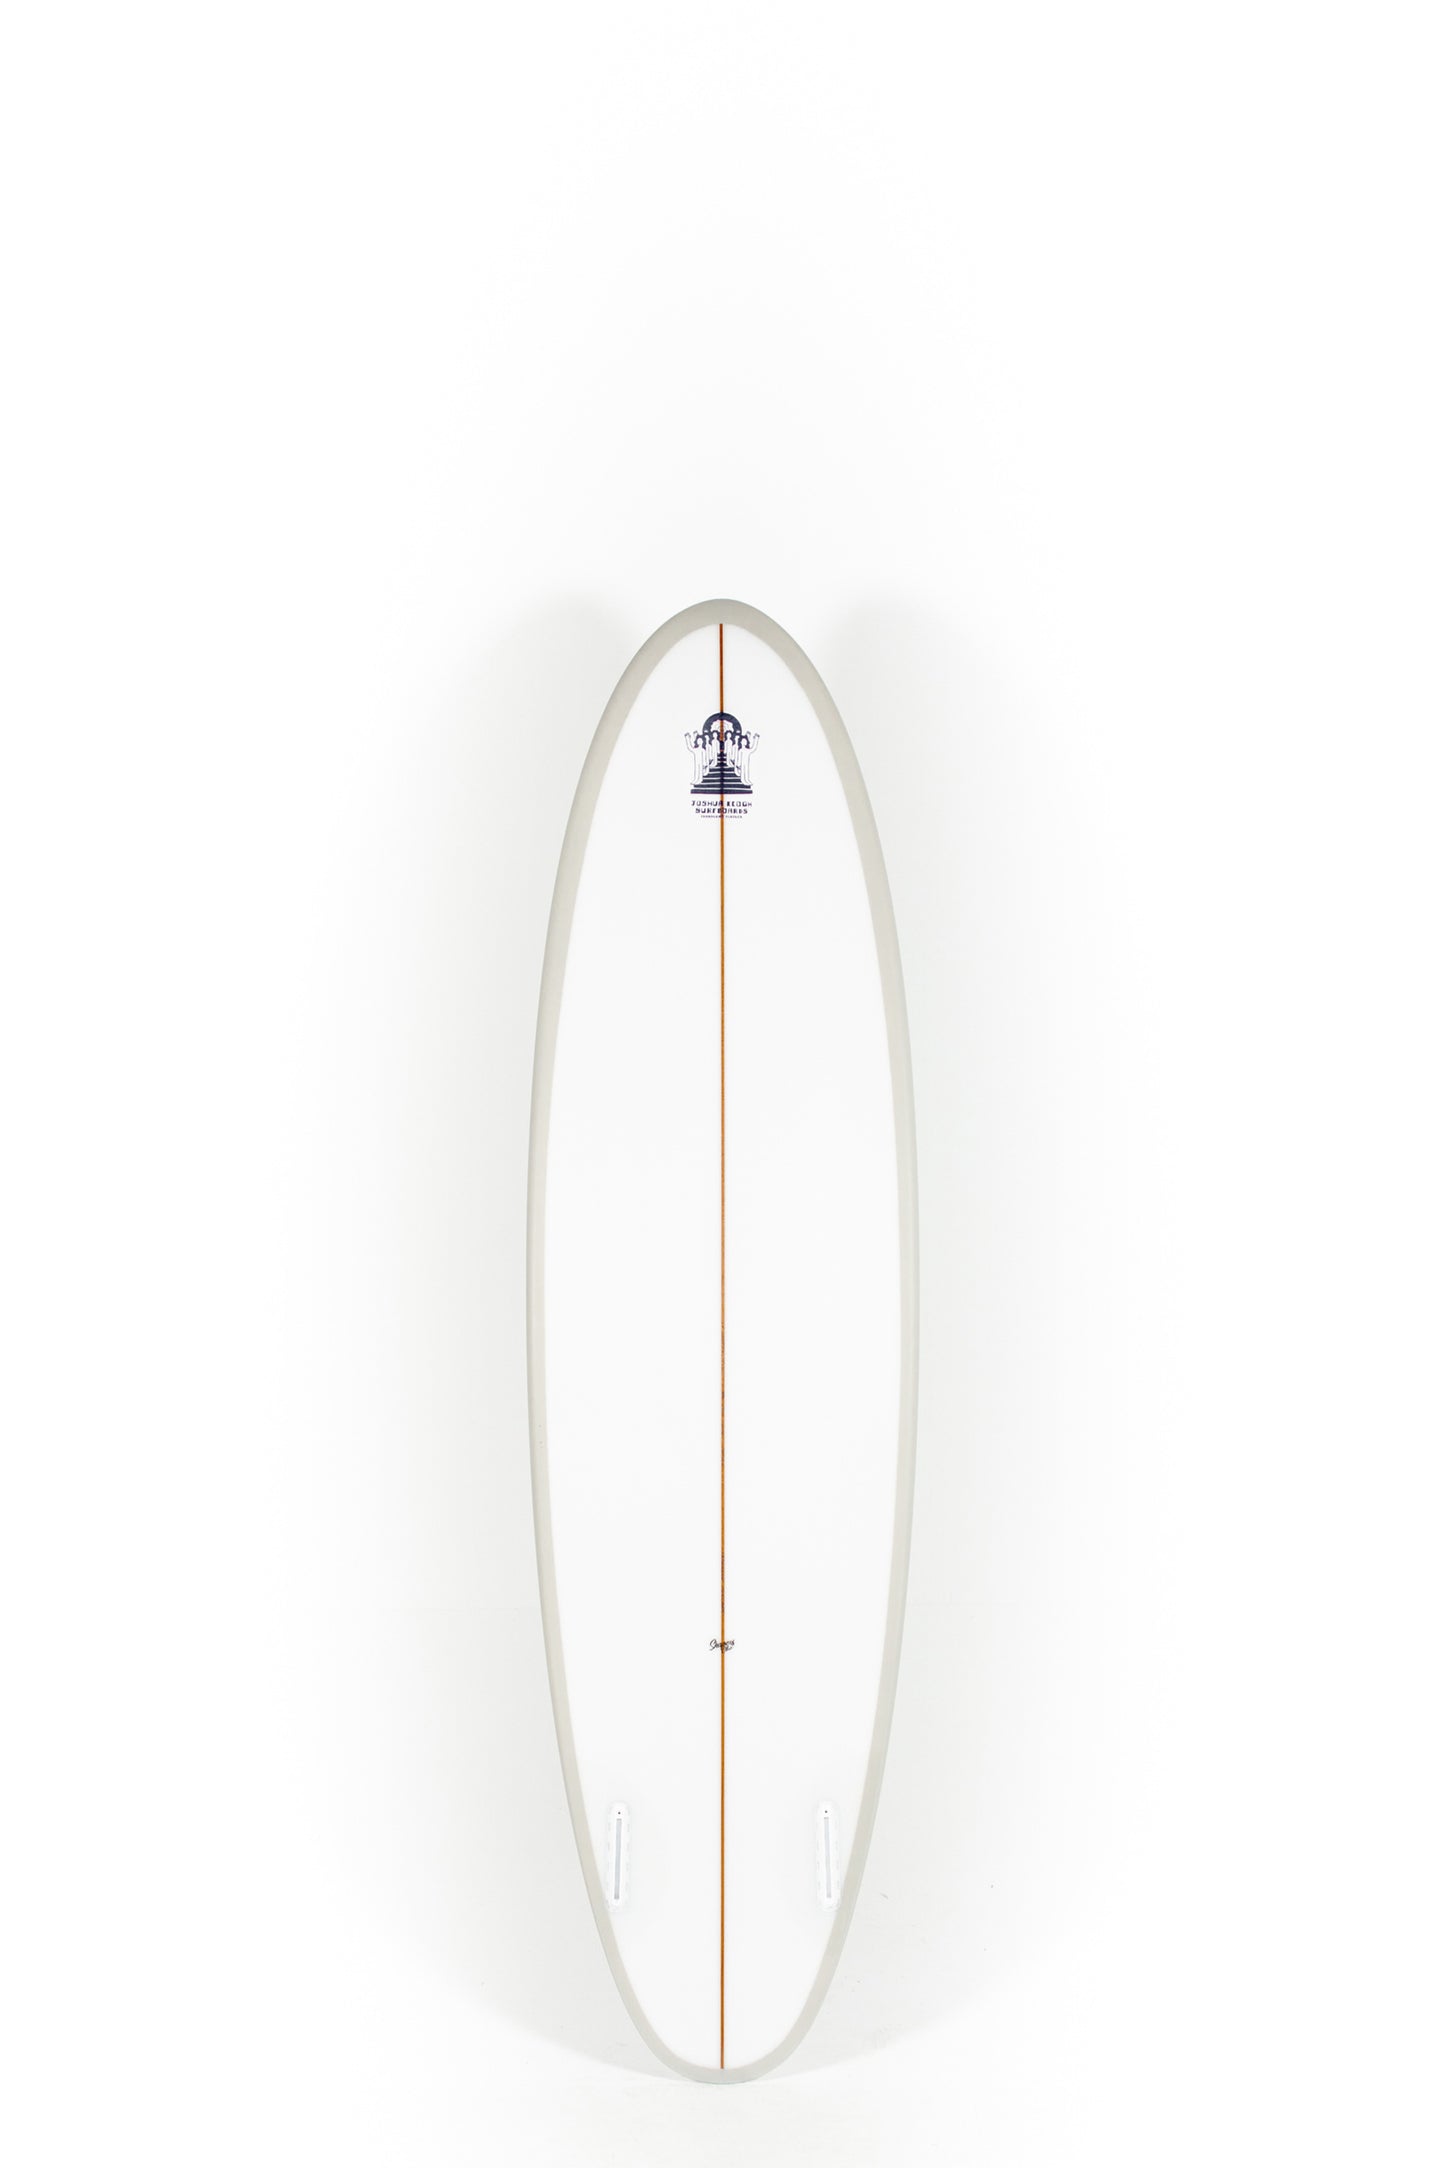 Pukas Surf Shop - Joshua Keogh Surfboard - LIBERATOR TWIN by Joshua Keogh - 6'8" x 21 x 2 5/8 - LIBERATOR68